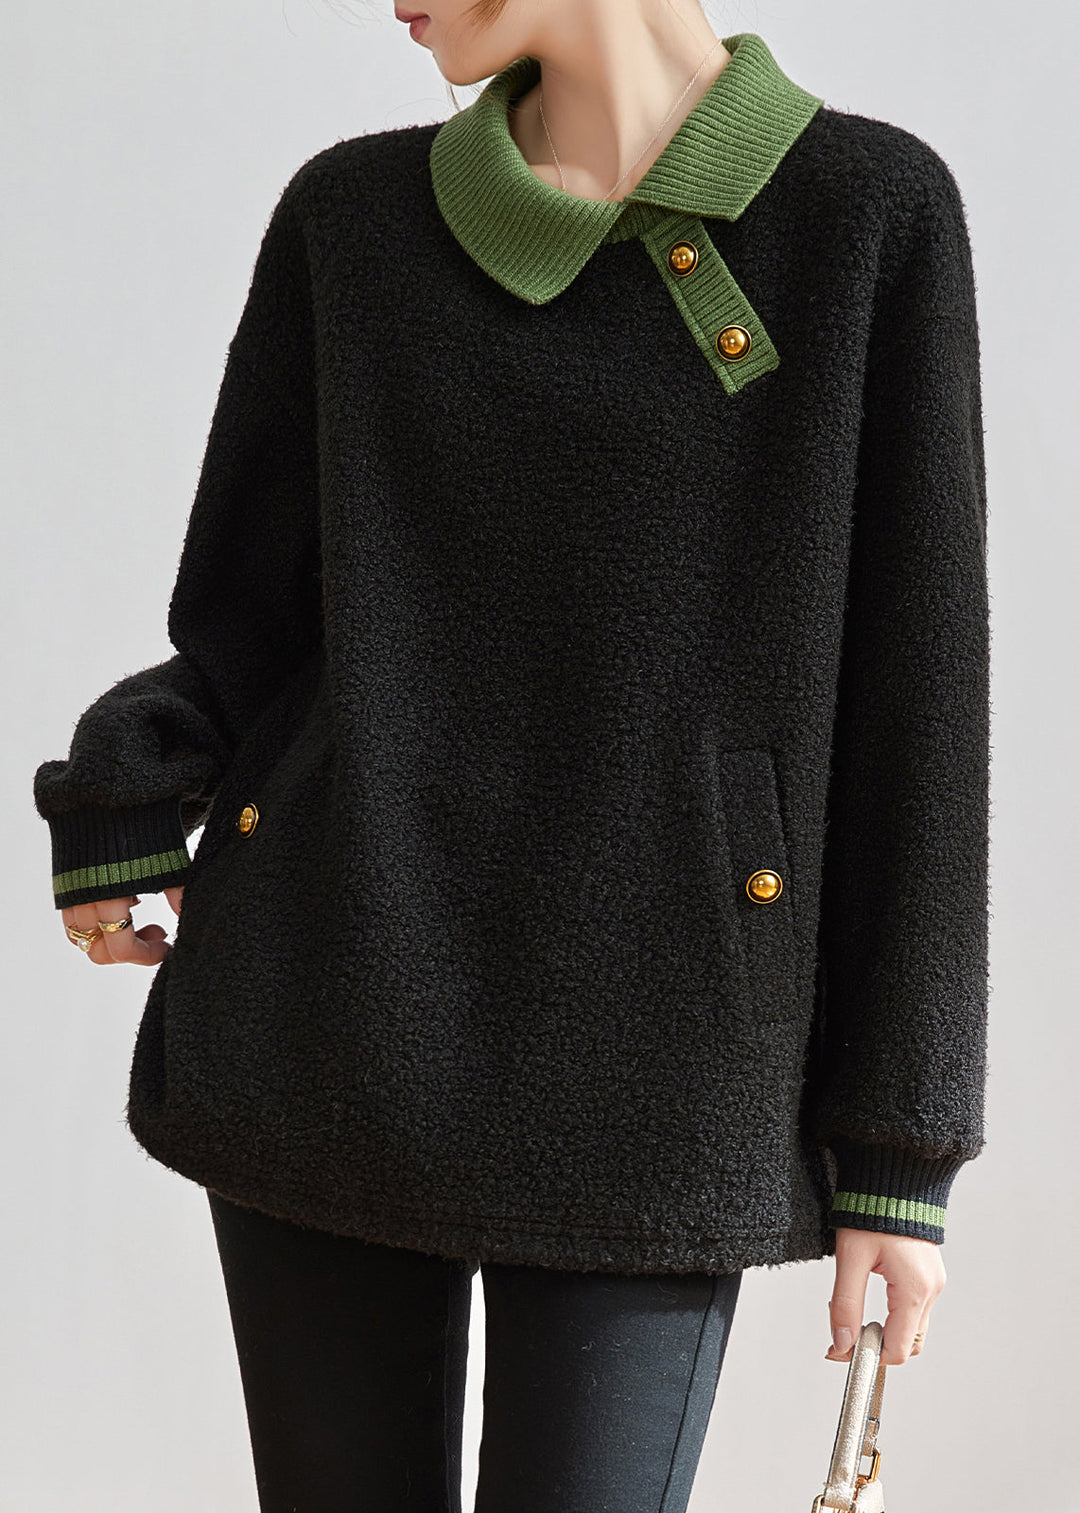 Women Black Peter Pan Collar Patchwork Teddy Faux Fur Sweatshirts Top Winter